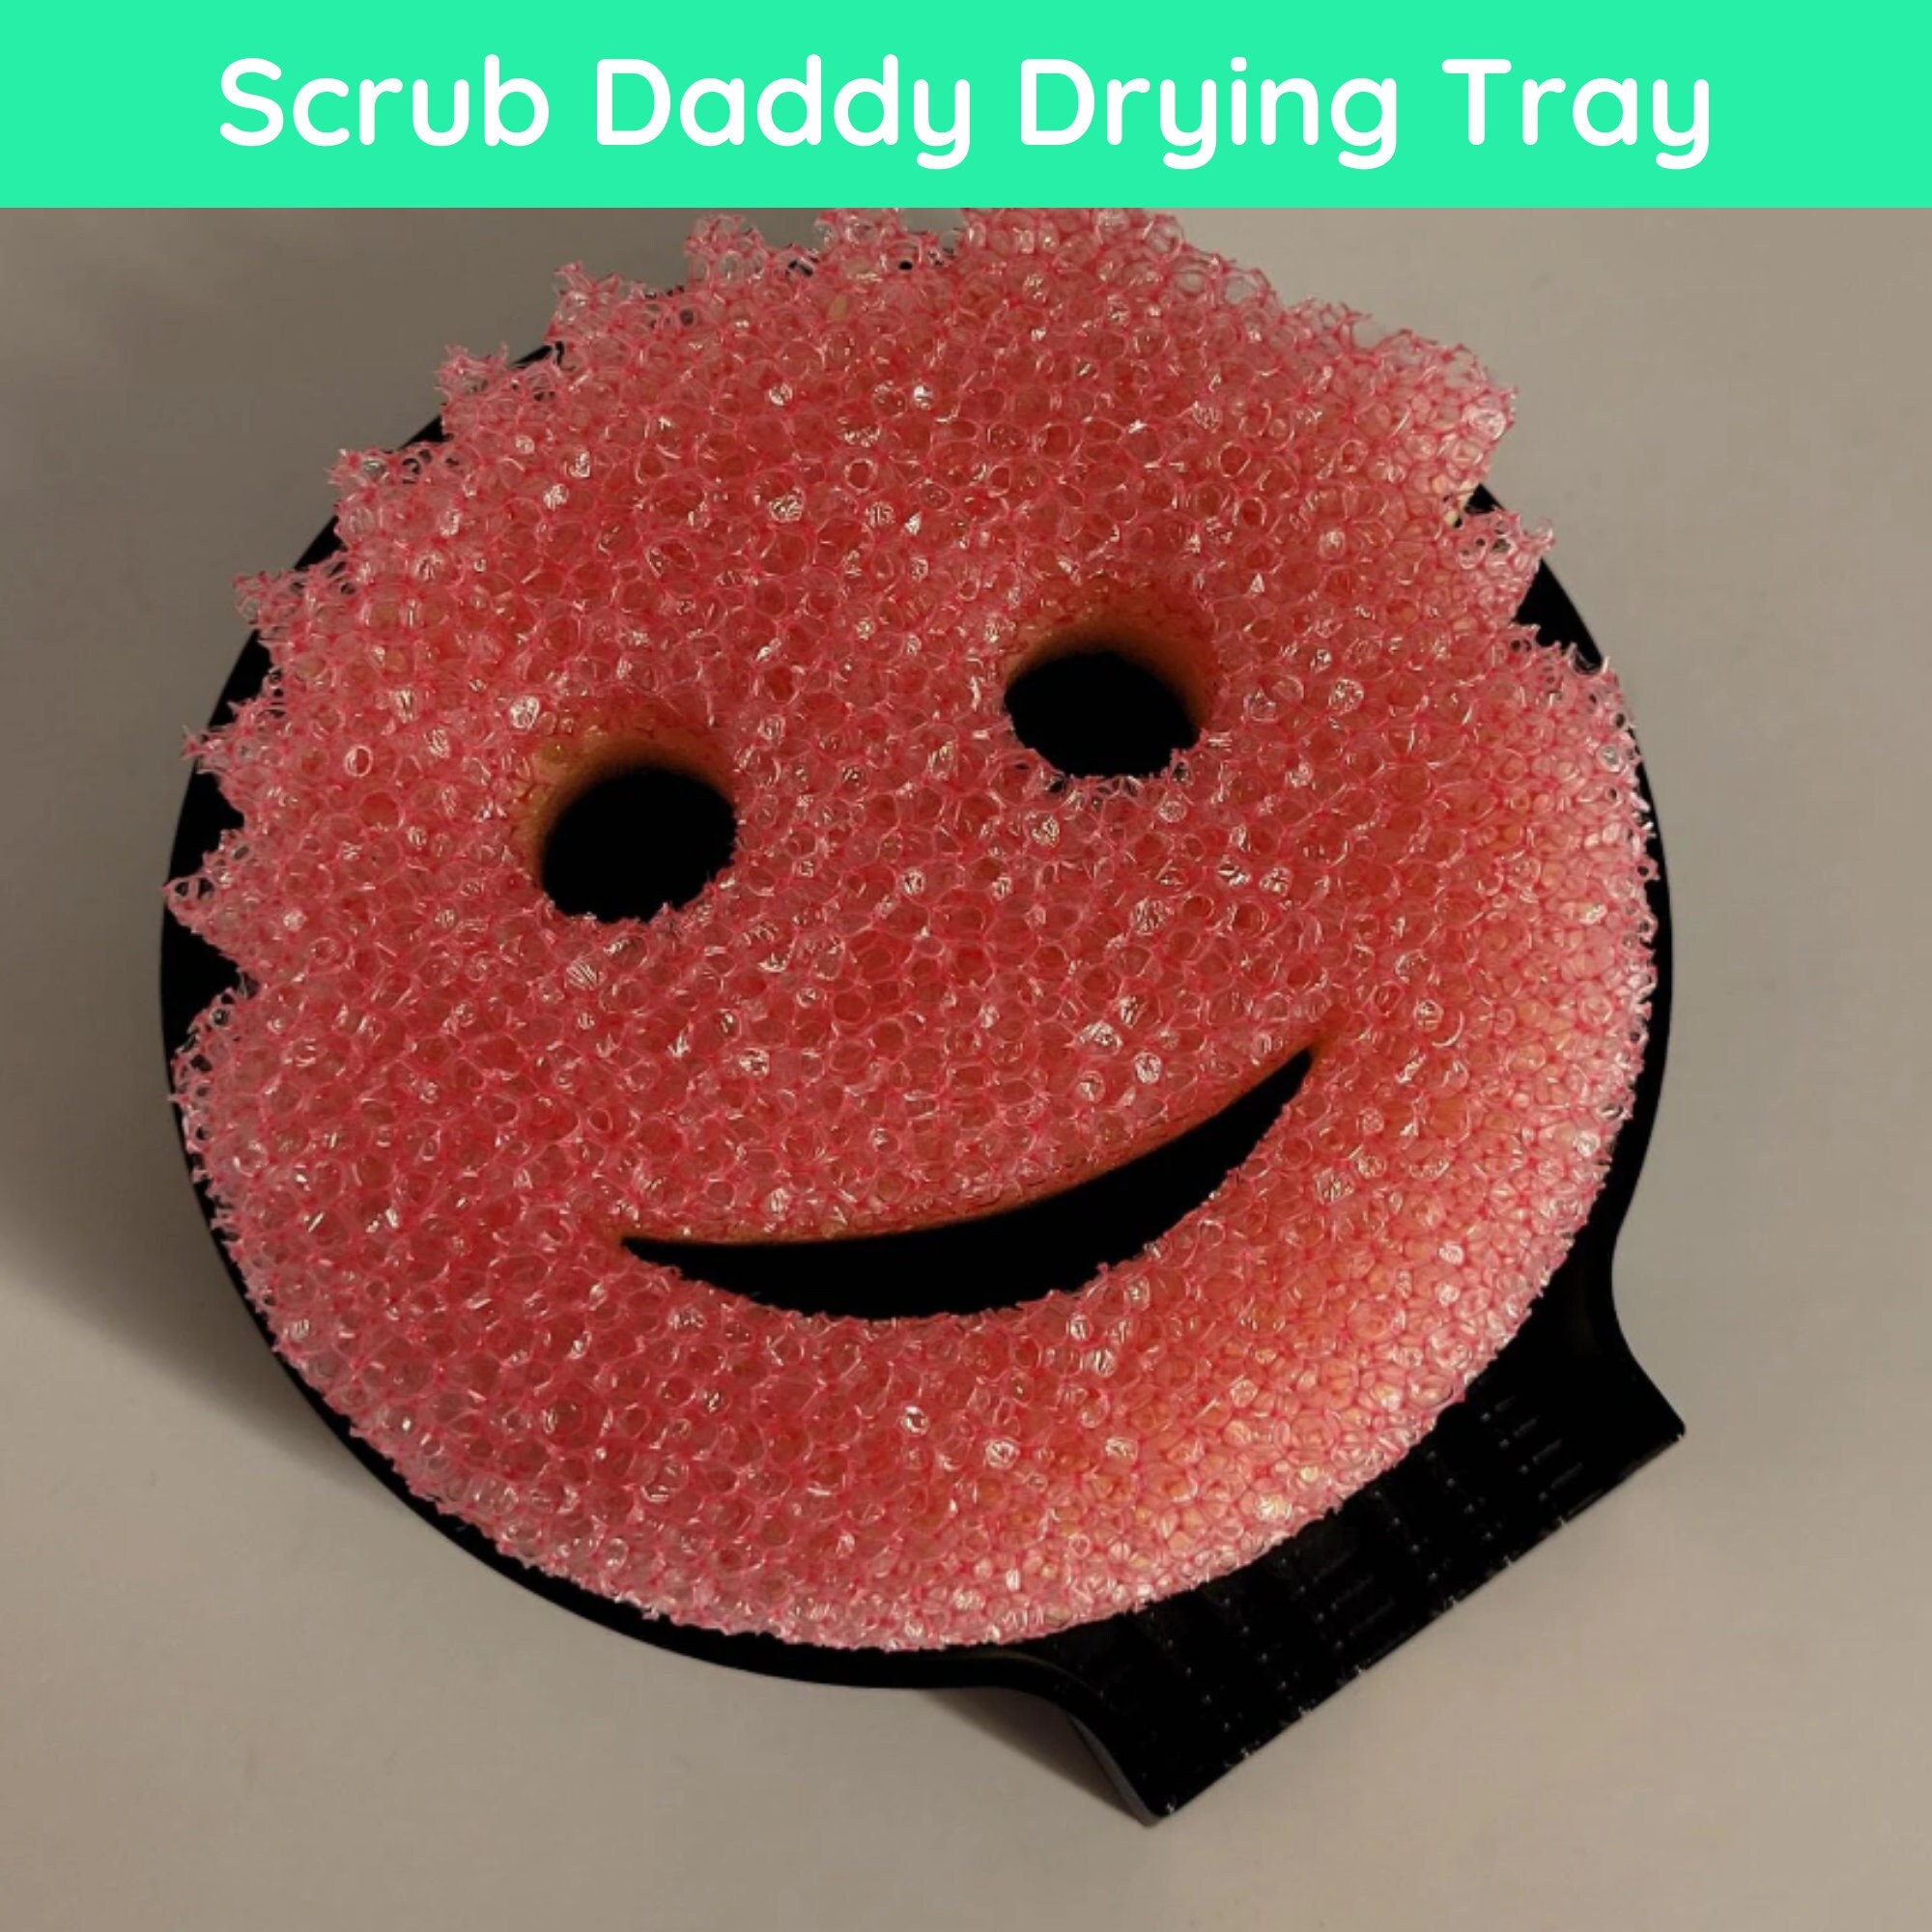 Scrub Daddy Halloween Sponge $4.48